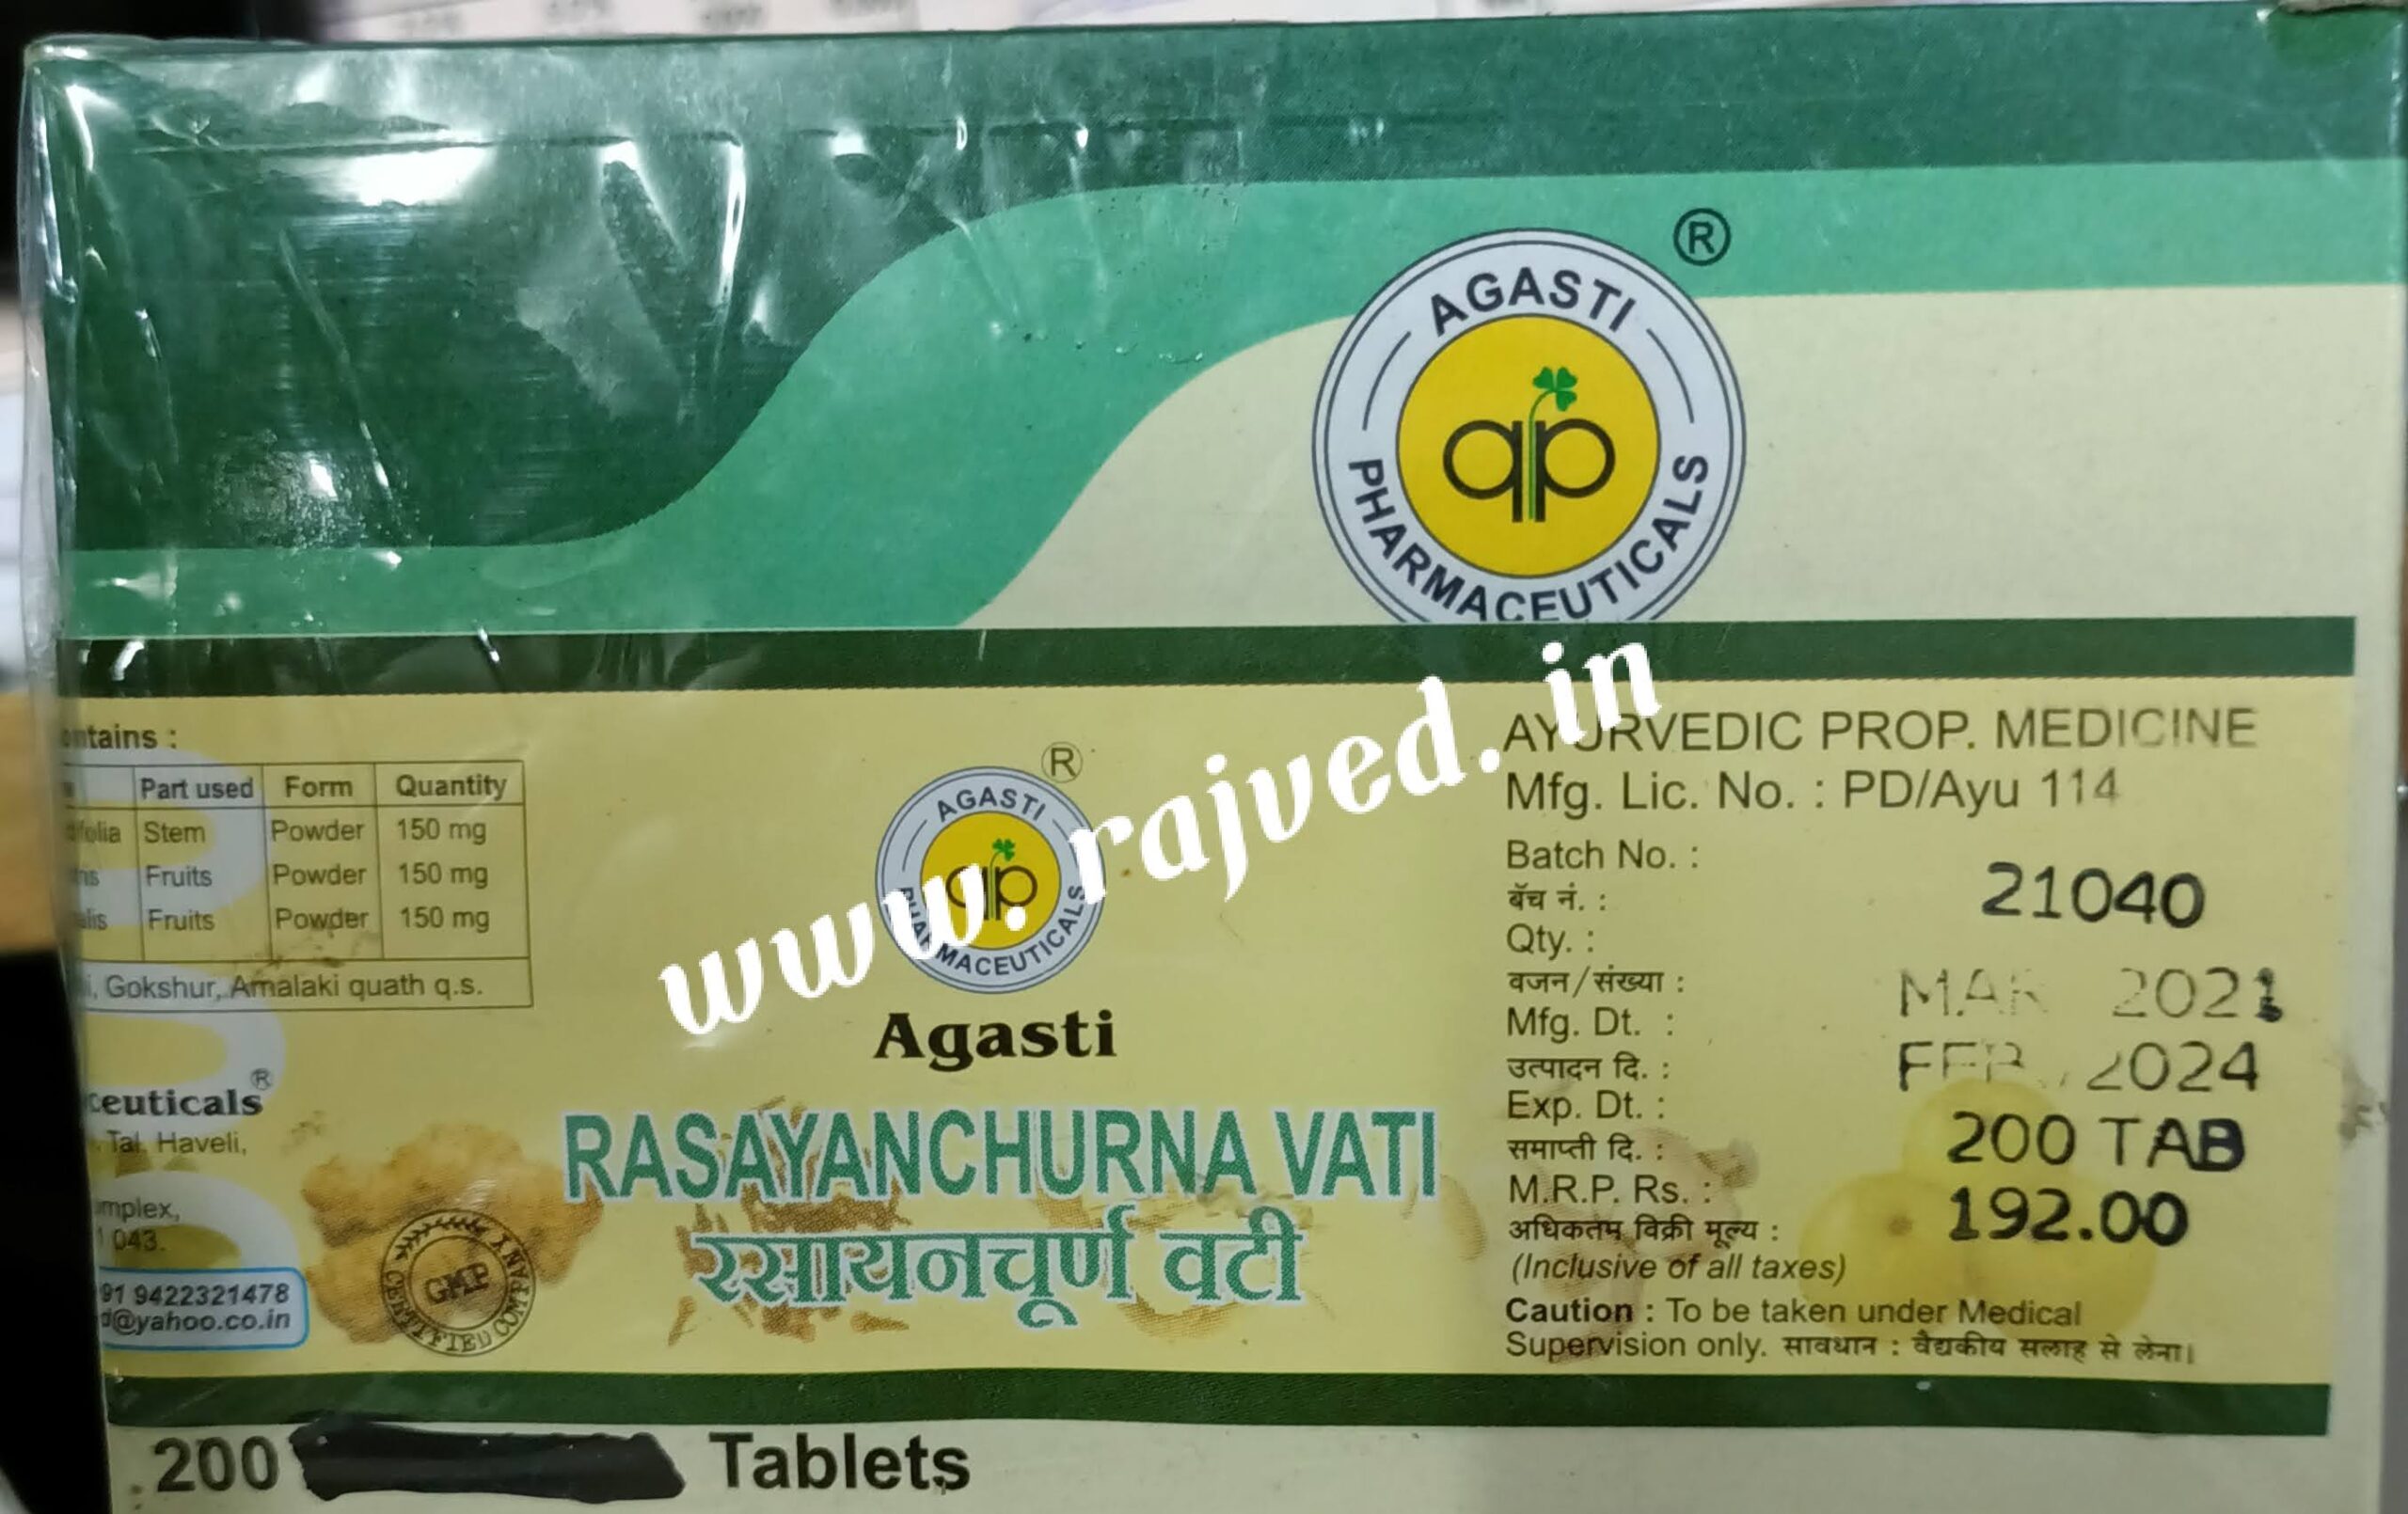 rasayan churna vati tablets 400tabs agasti pharmaceuticals